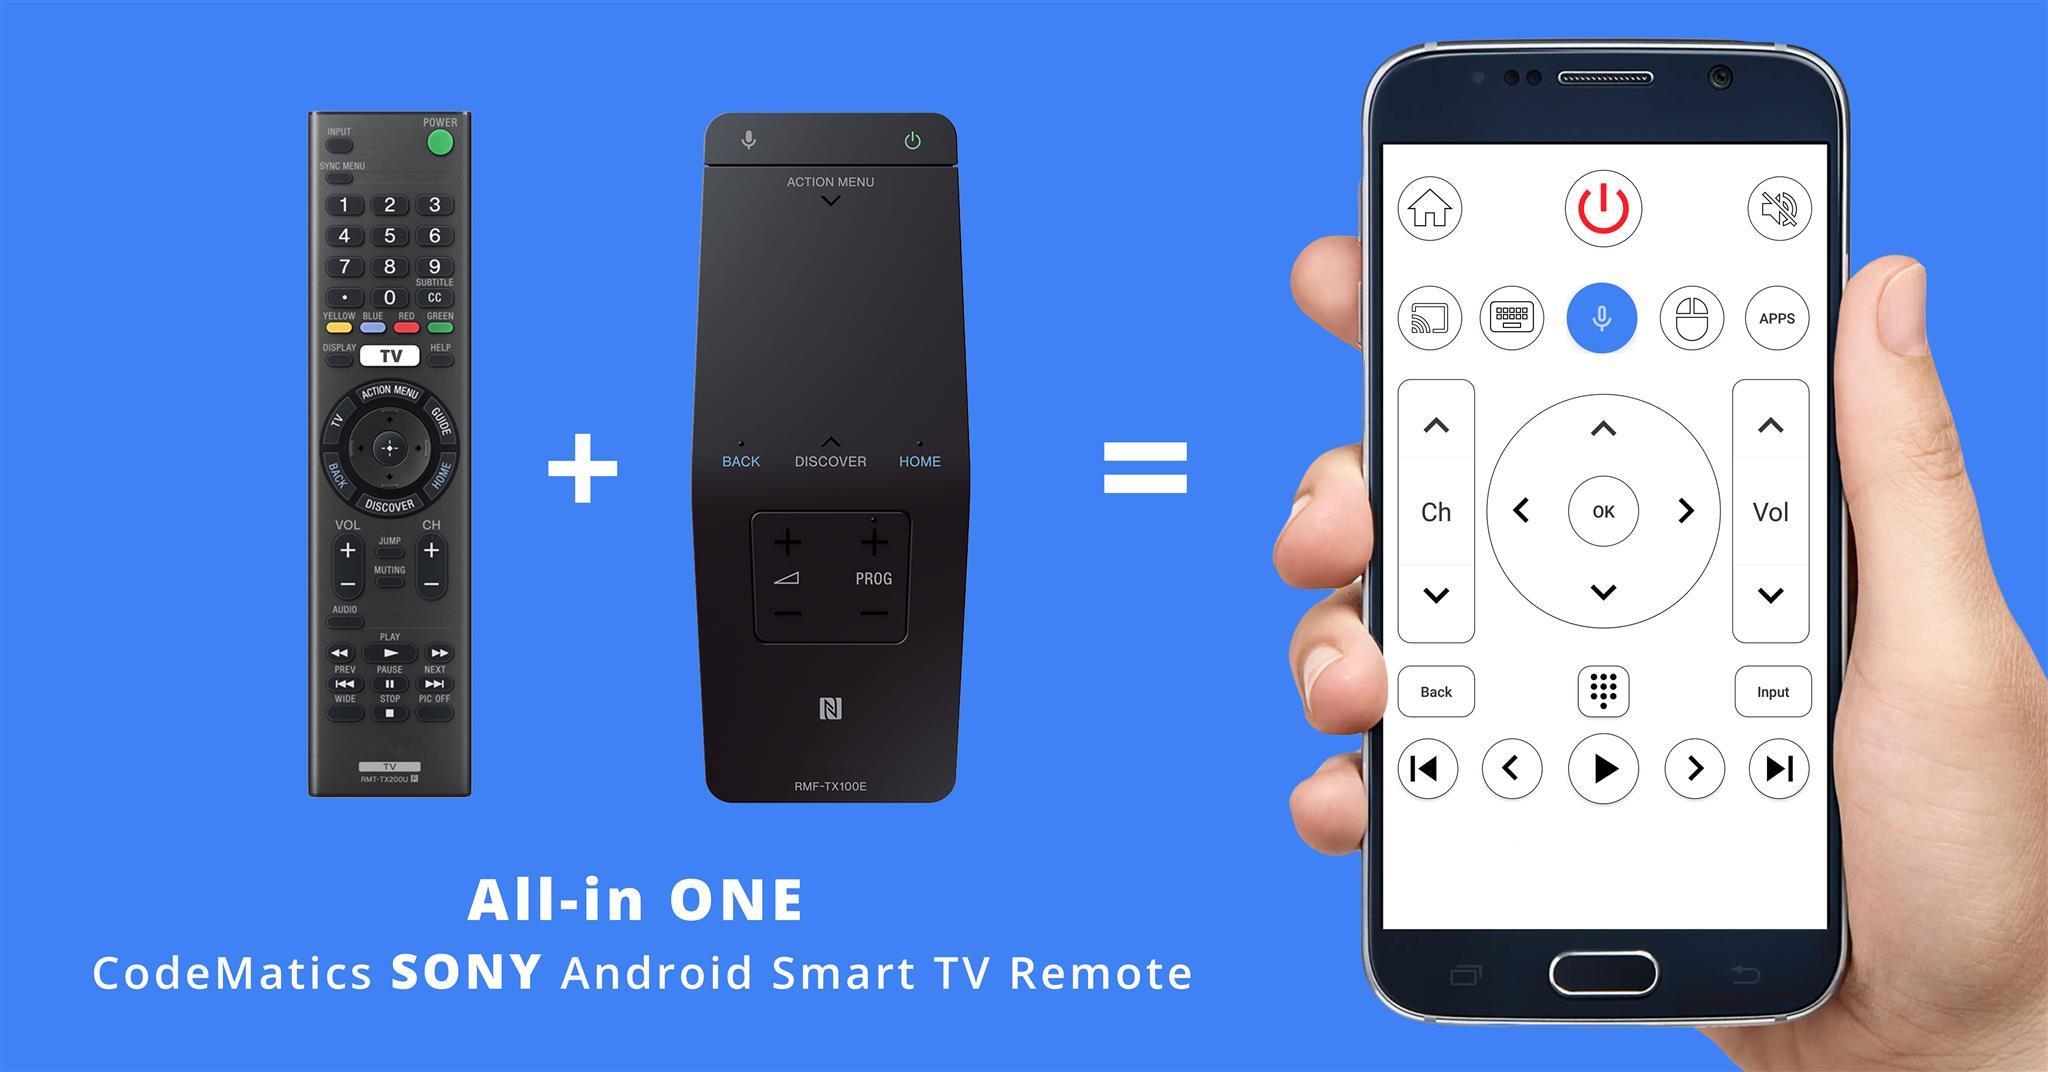 Пульт андроида голосовой. Smart Remote Control пульт. Андроид ТВ Remote Control. Sony TV Remote. Пульт для Android TV 1.3.1.